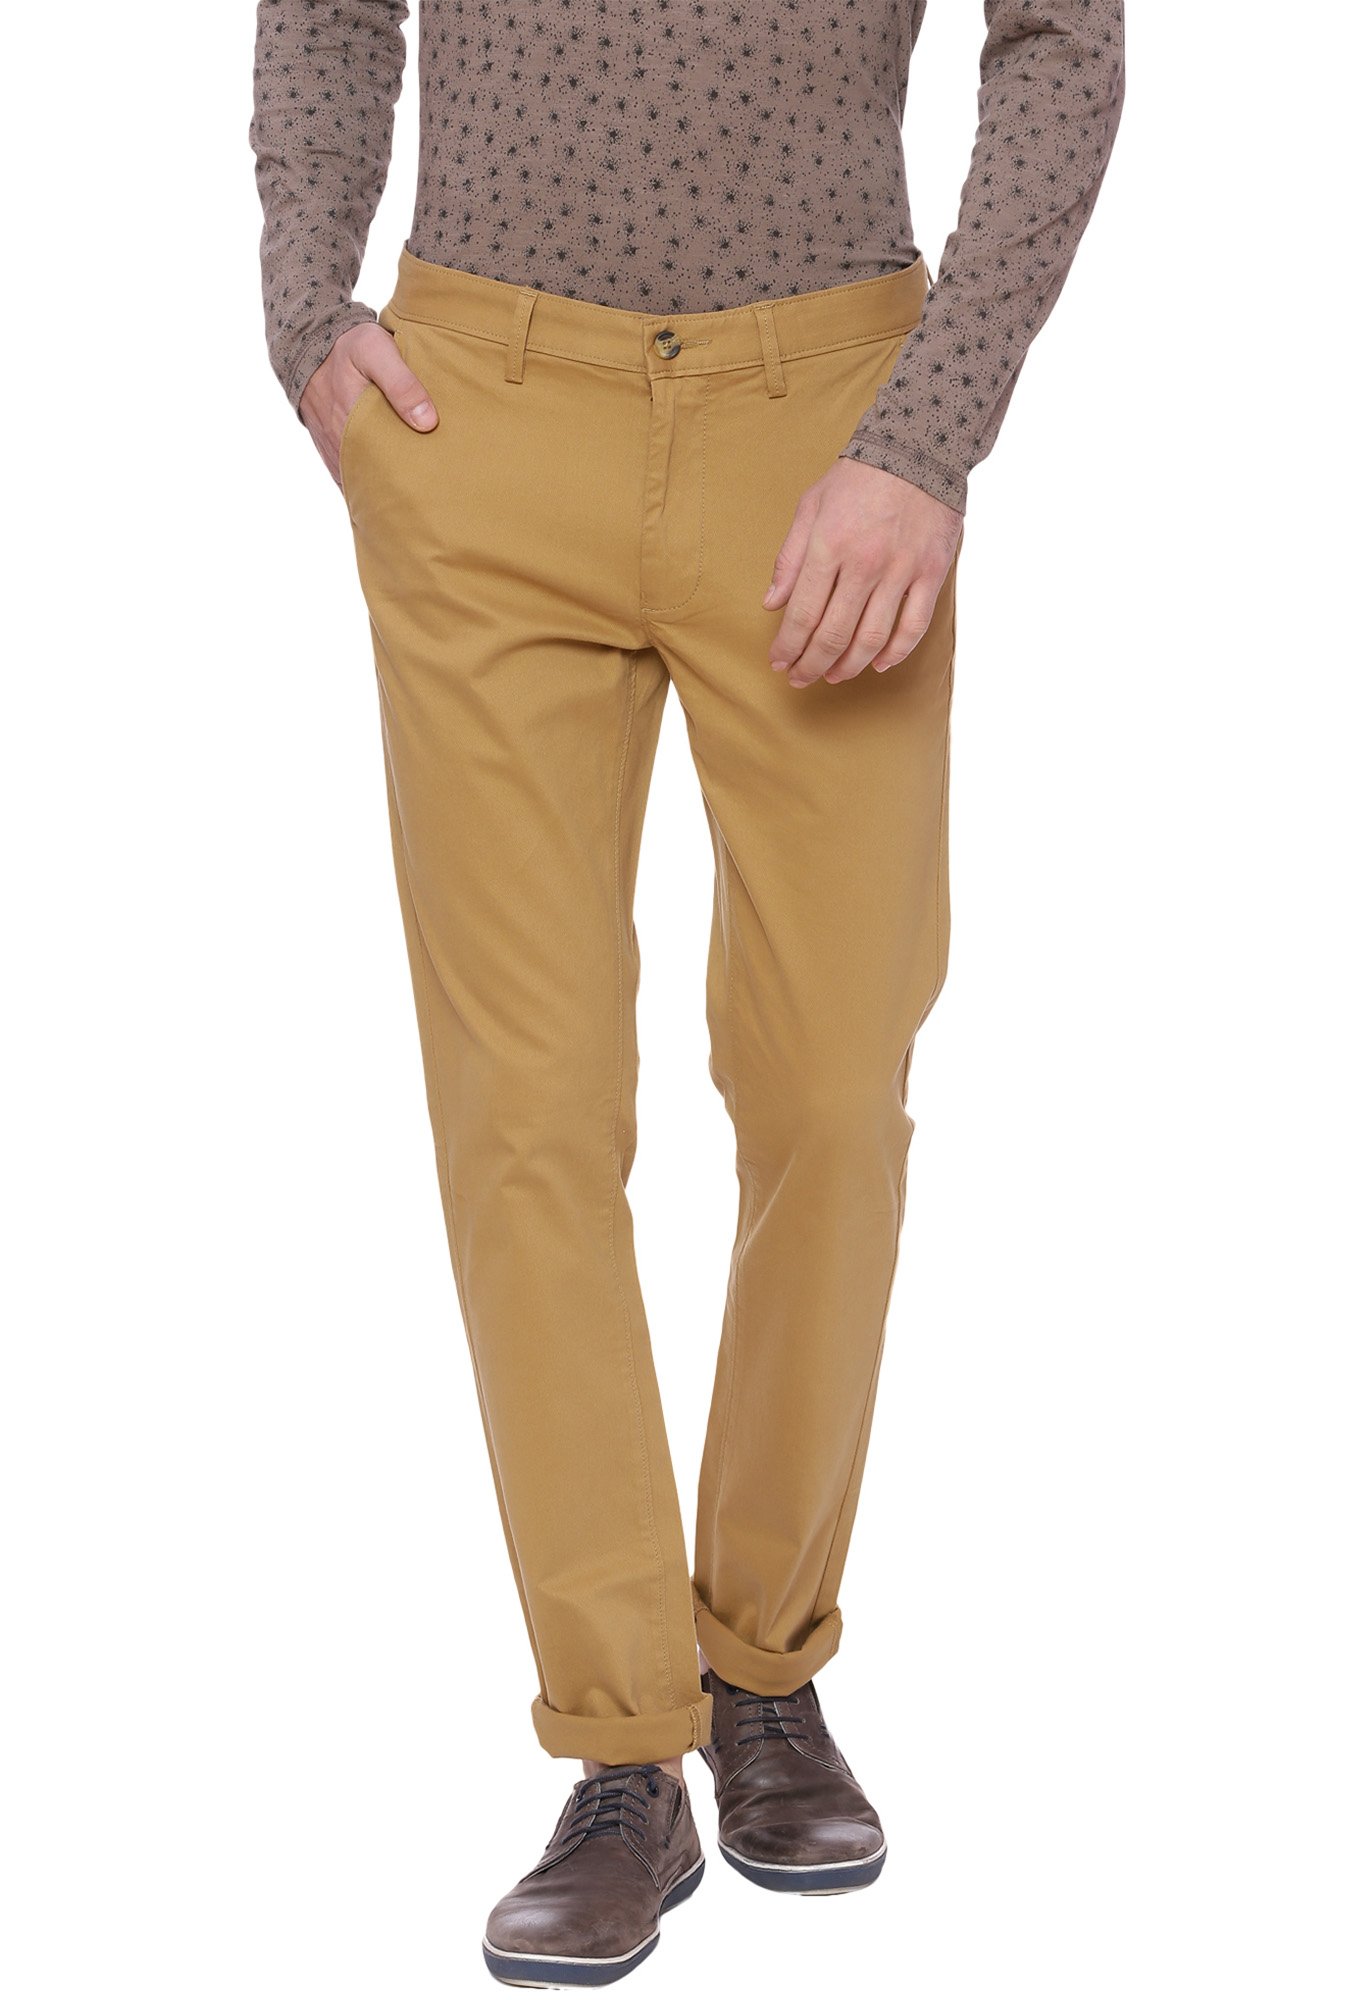 Buy Basics Khaki Low Rise Flat Front Tapered Fit Trousers for Men Online   Tata CLiQ